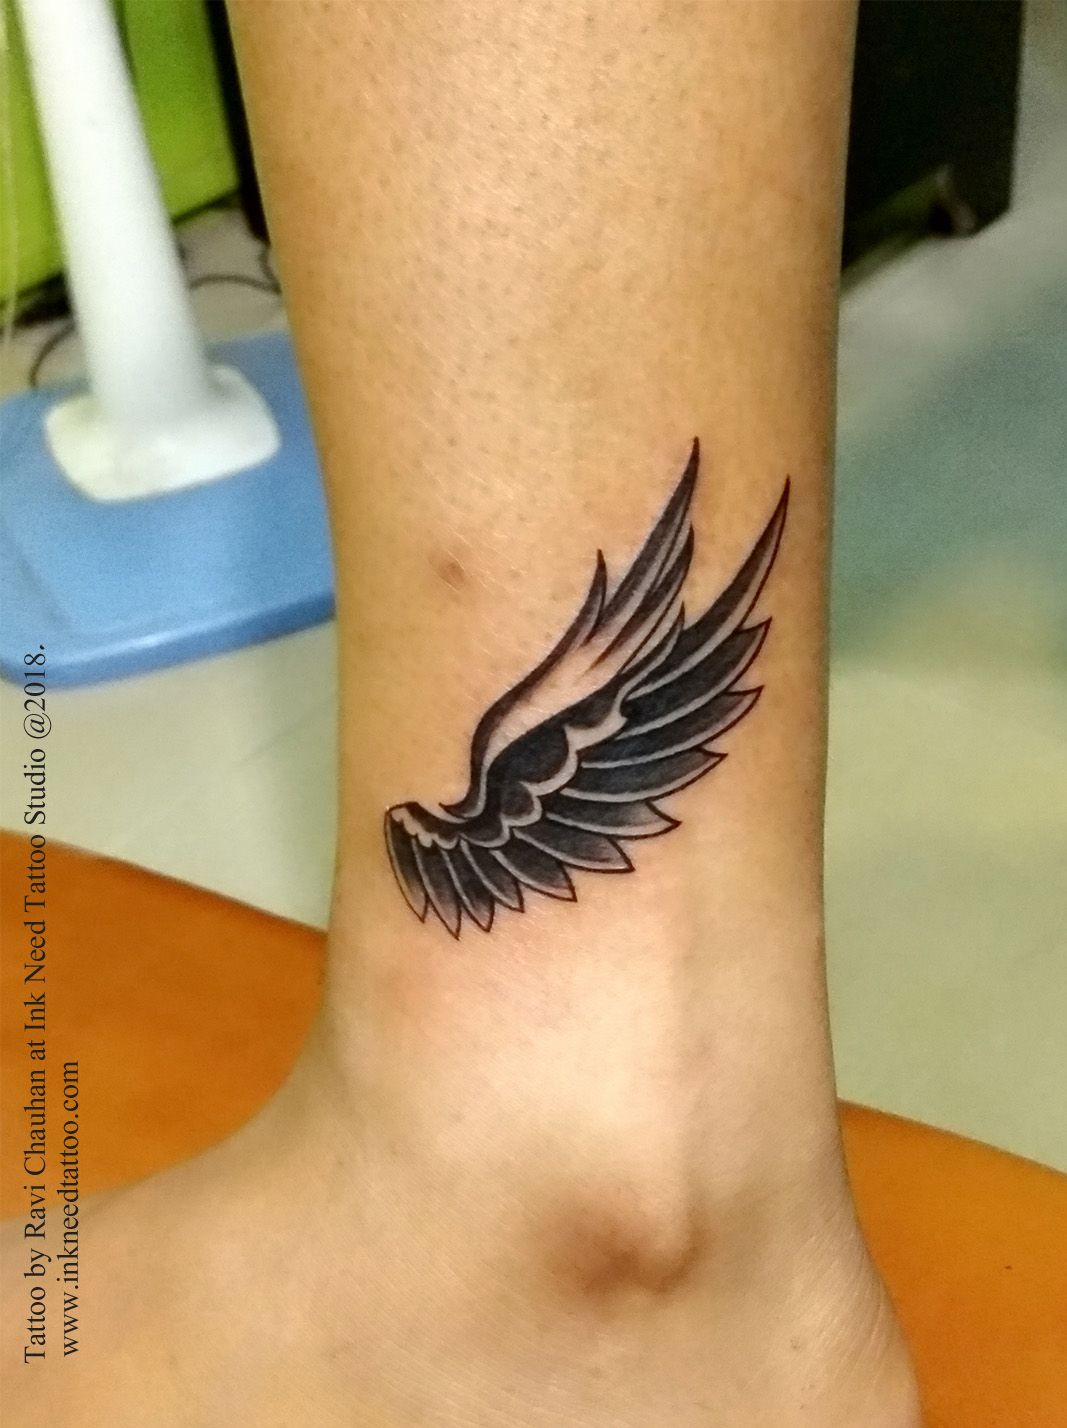 Ankle Tattootattoo For Girlgirl Tattoo Wings Tattoobeutiful Girl regarding dimensions 1067 X 1428